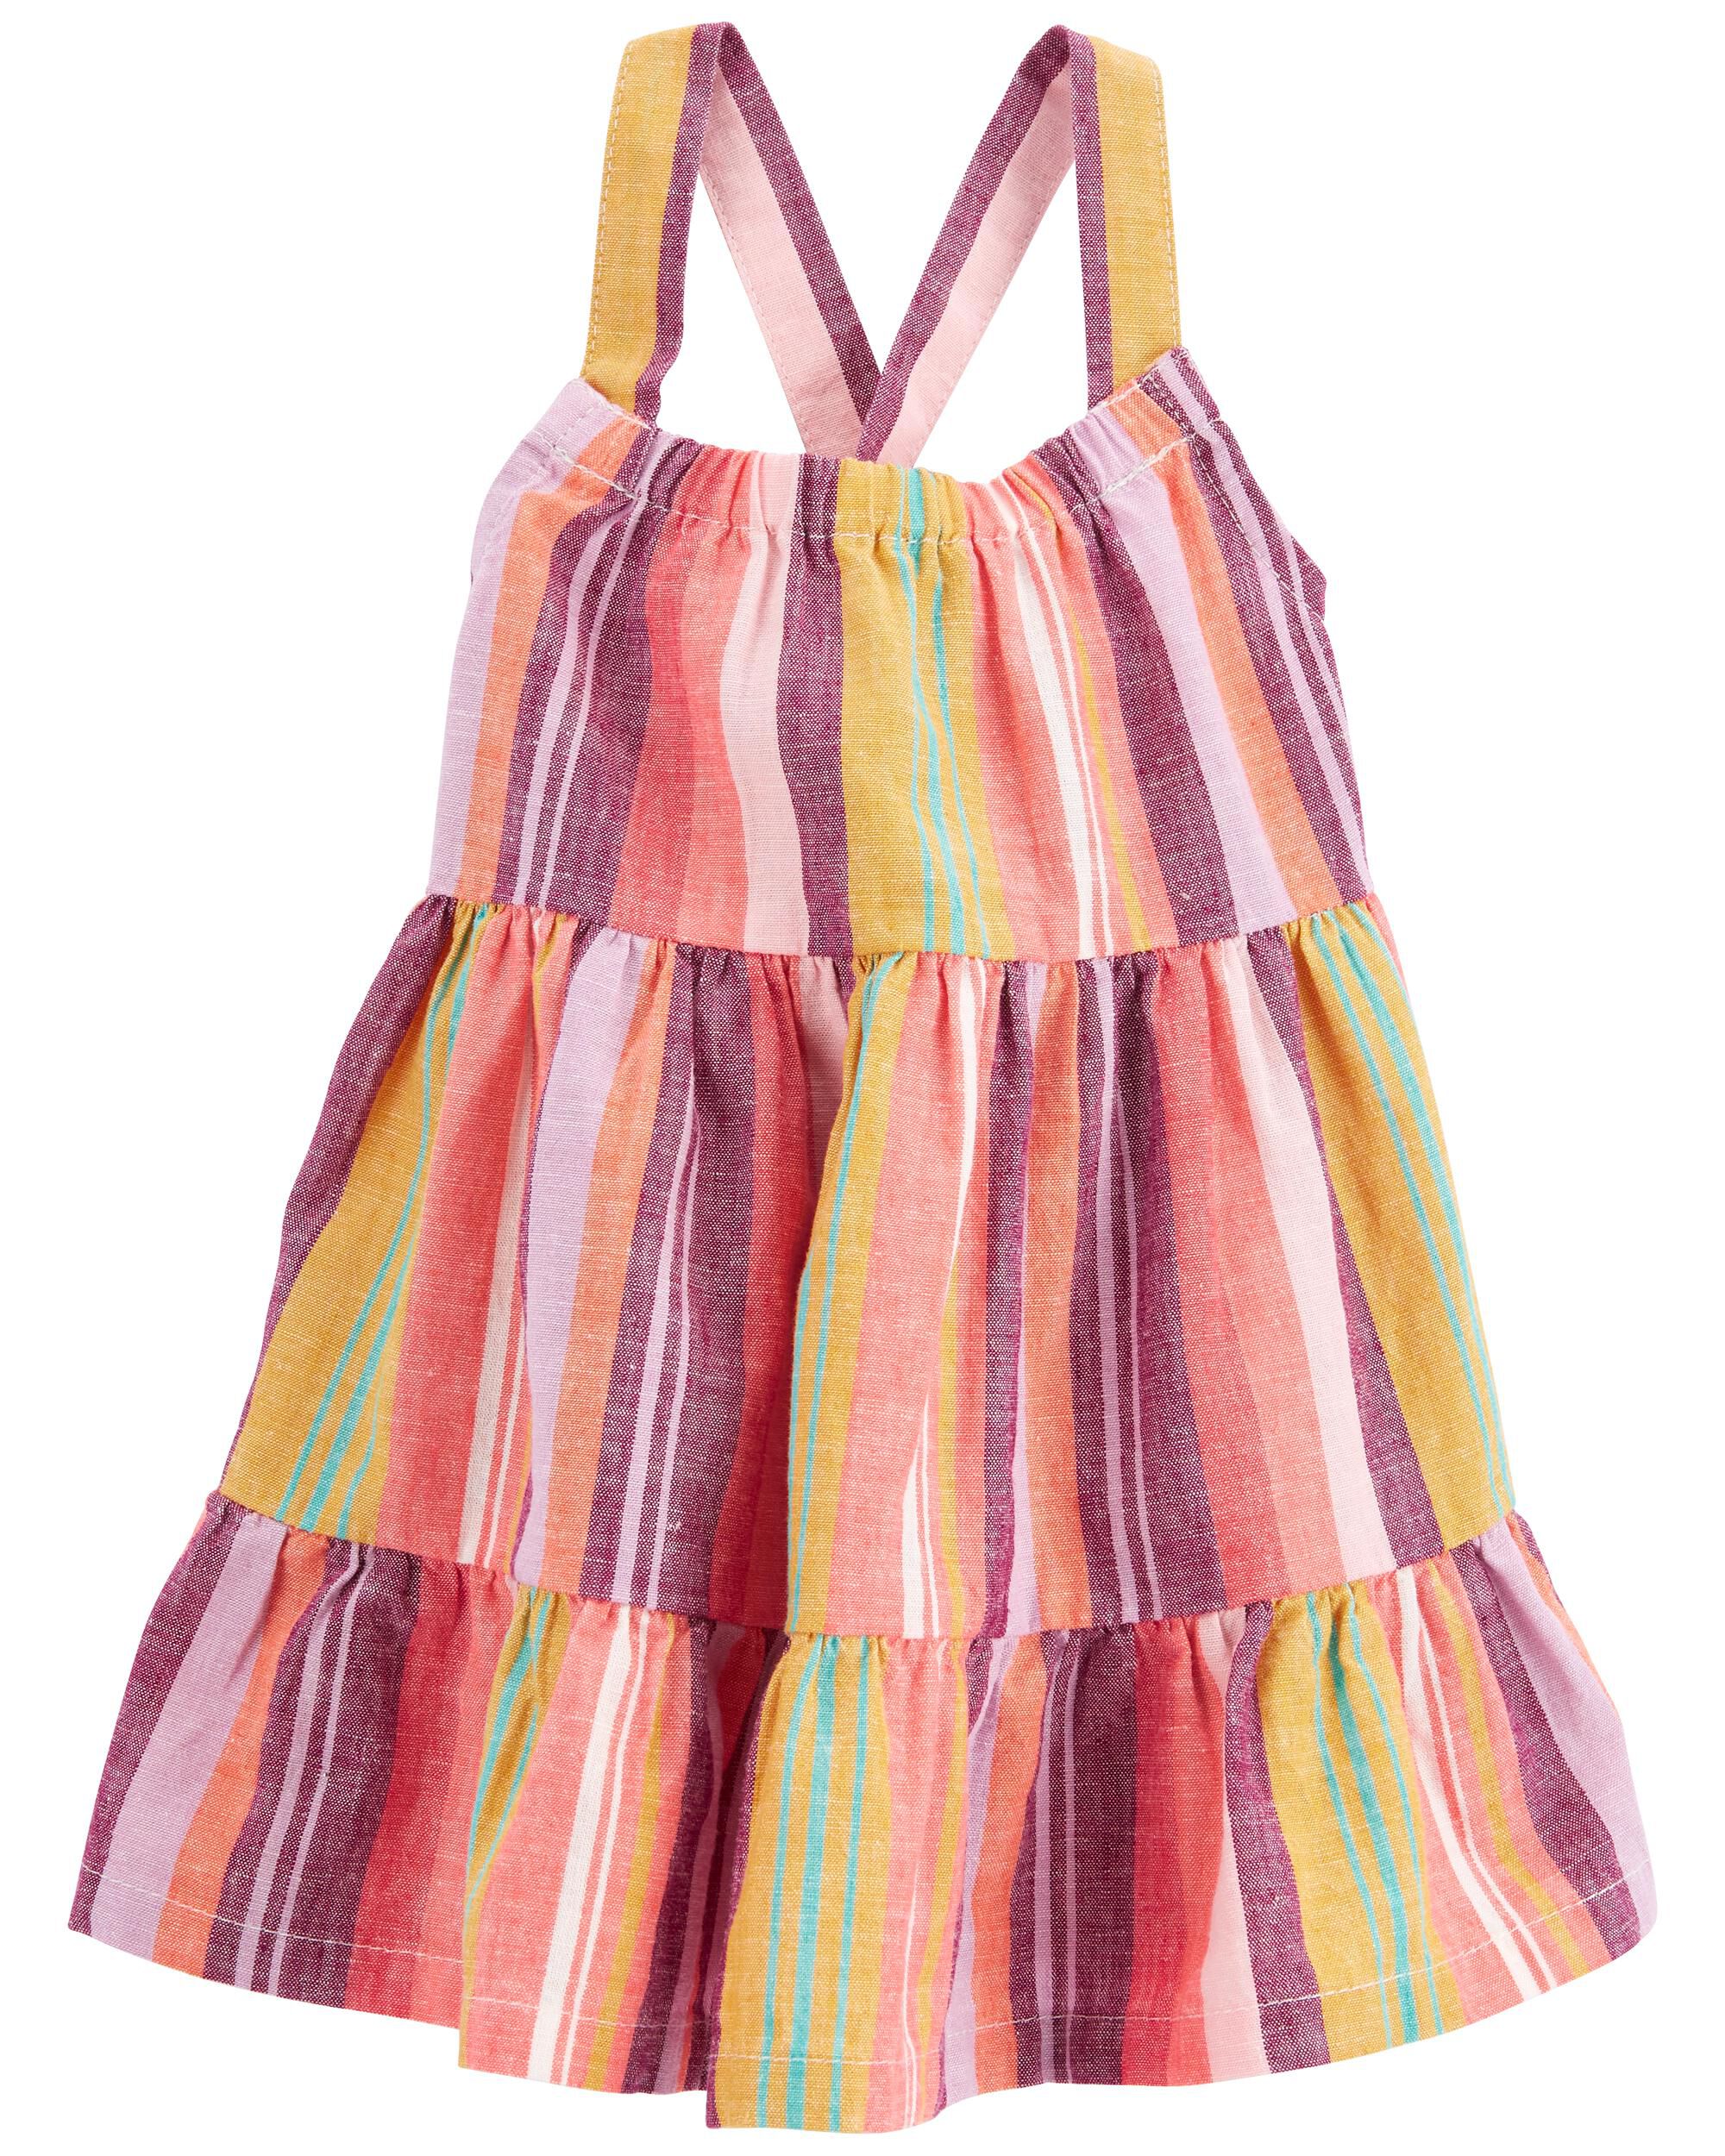 Details about   NWT Girl's Infants Carter's Sundress Dress Size 18 Months #292K 